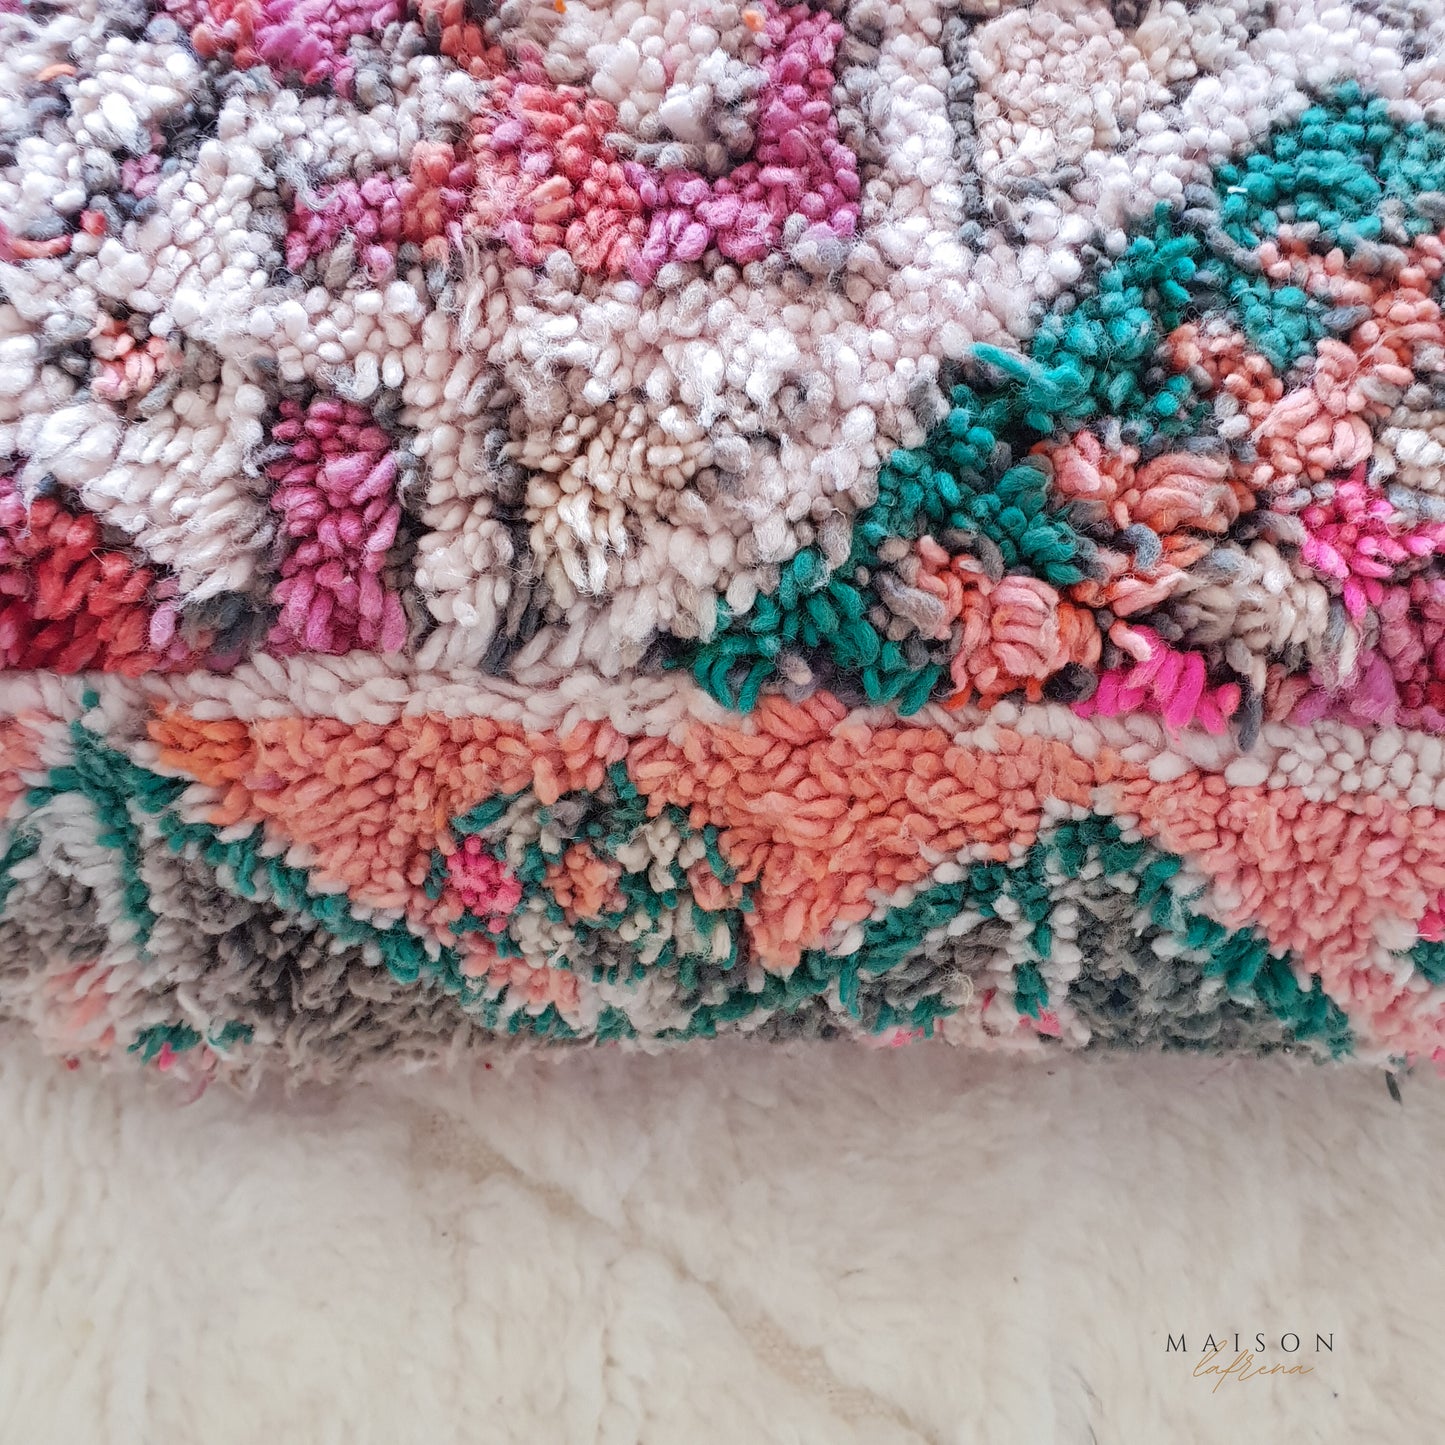 Moroccan Floor Cushion - Kilim Pouf Cover